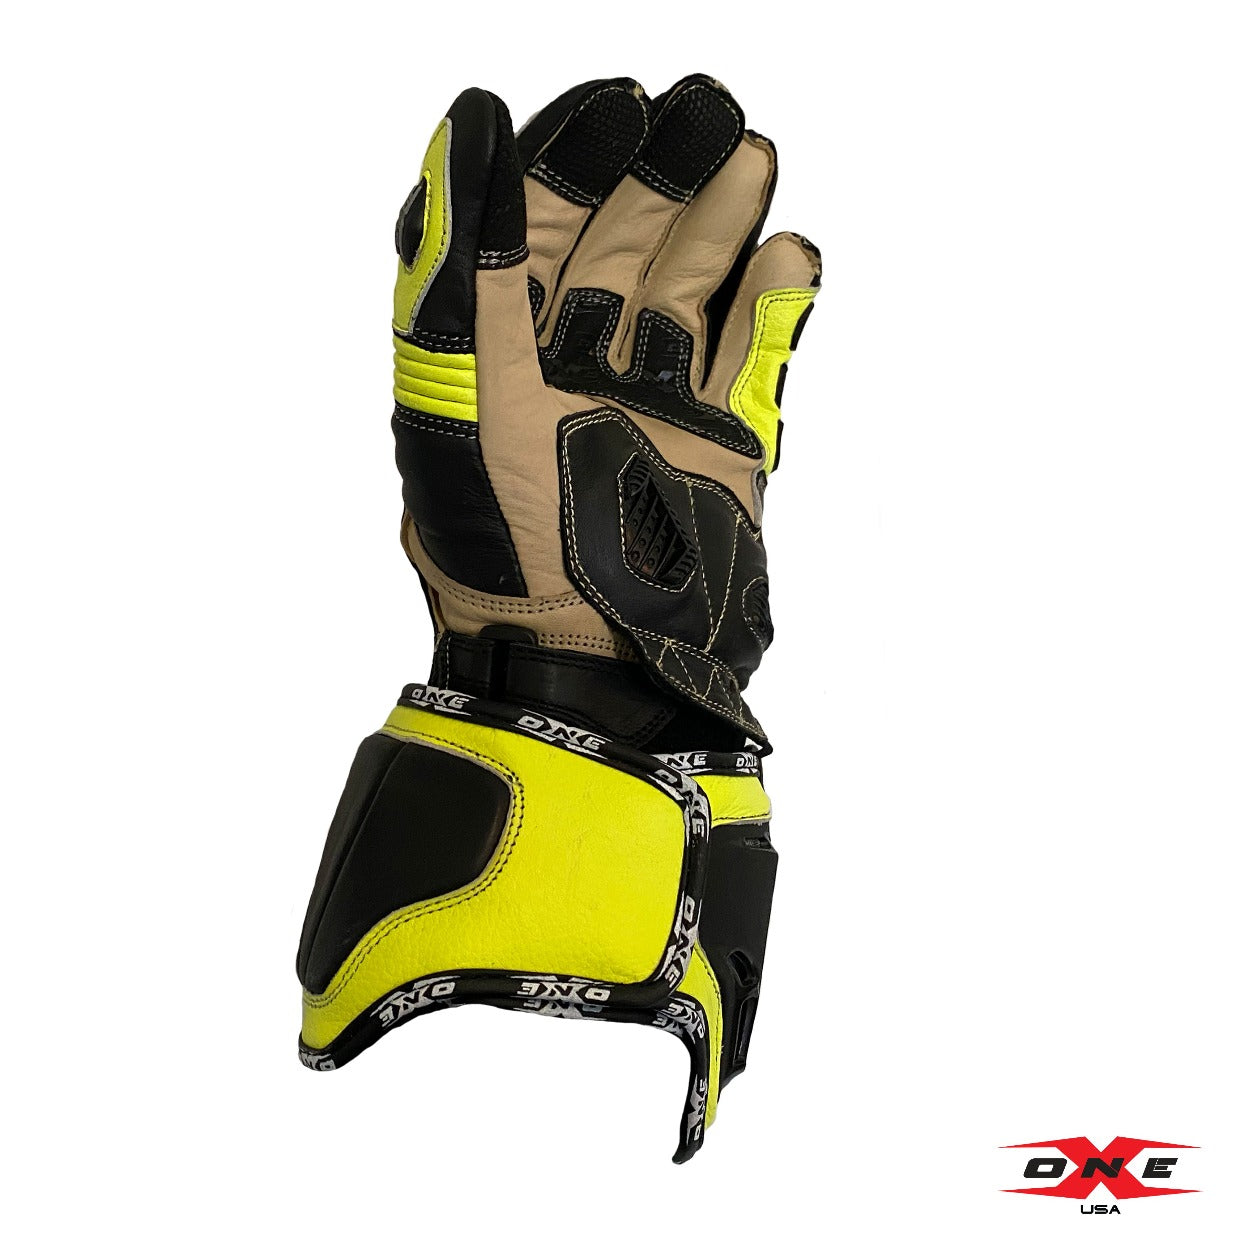 OneX USA Pro Race Gloves - Fluor Yellow